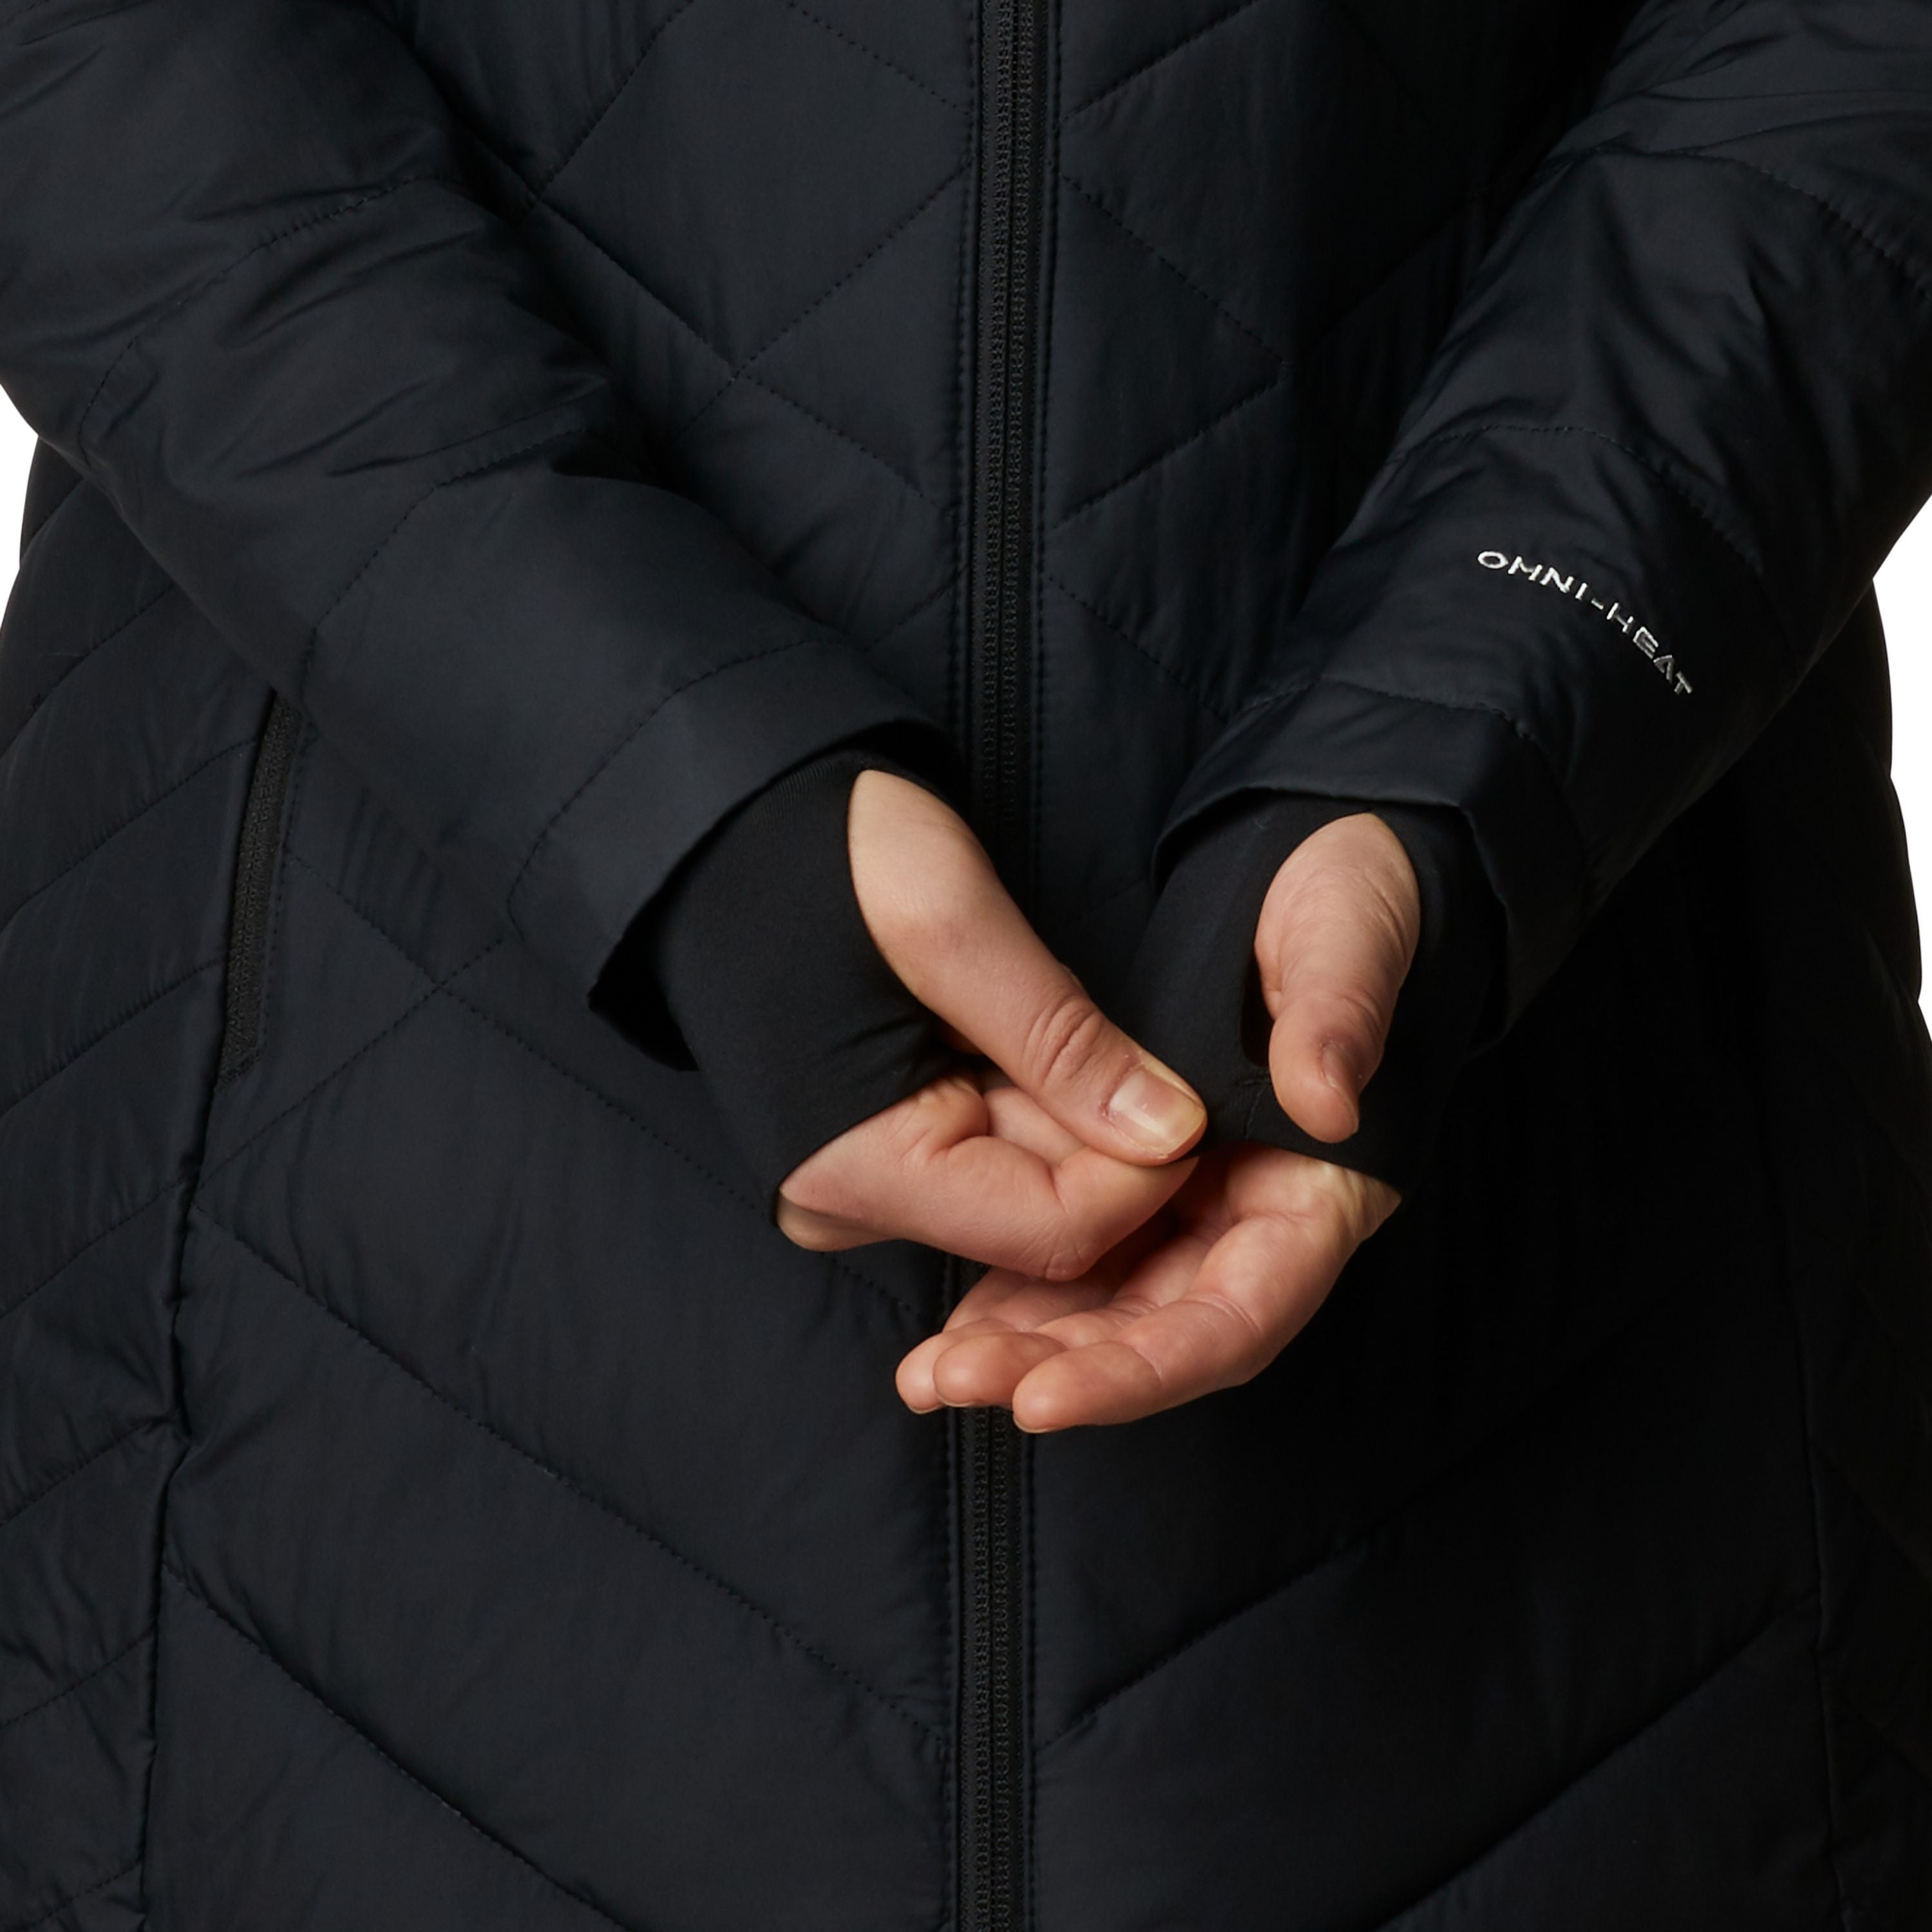 Manteau long avec capuchon "Heavenly" - Femme||"Heavenly" Long hooded jacket - Women's